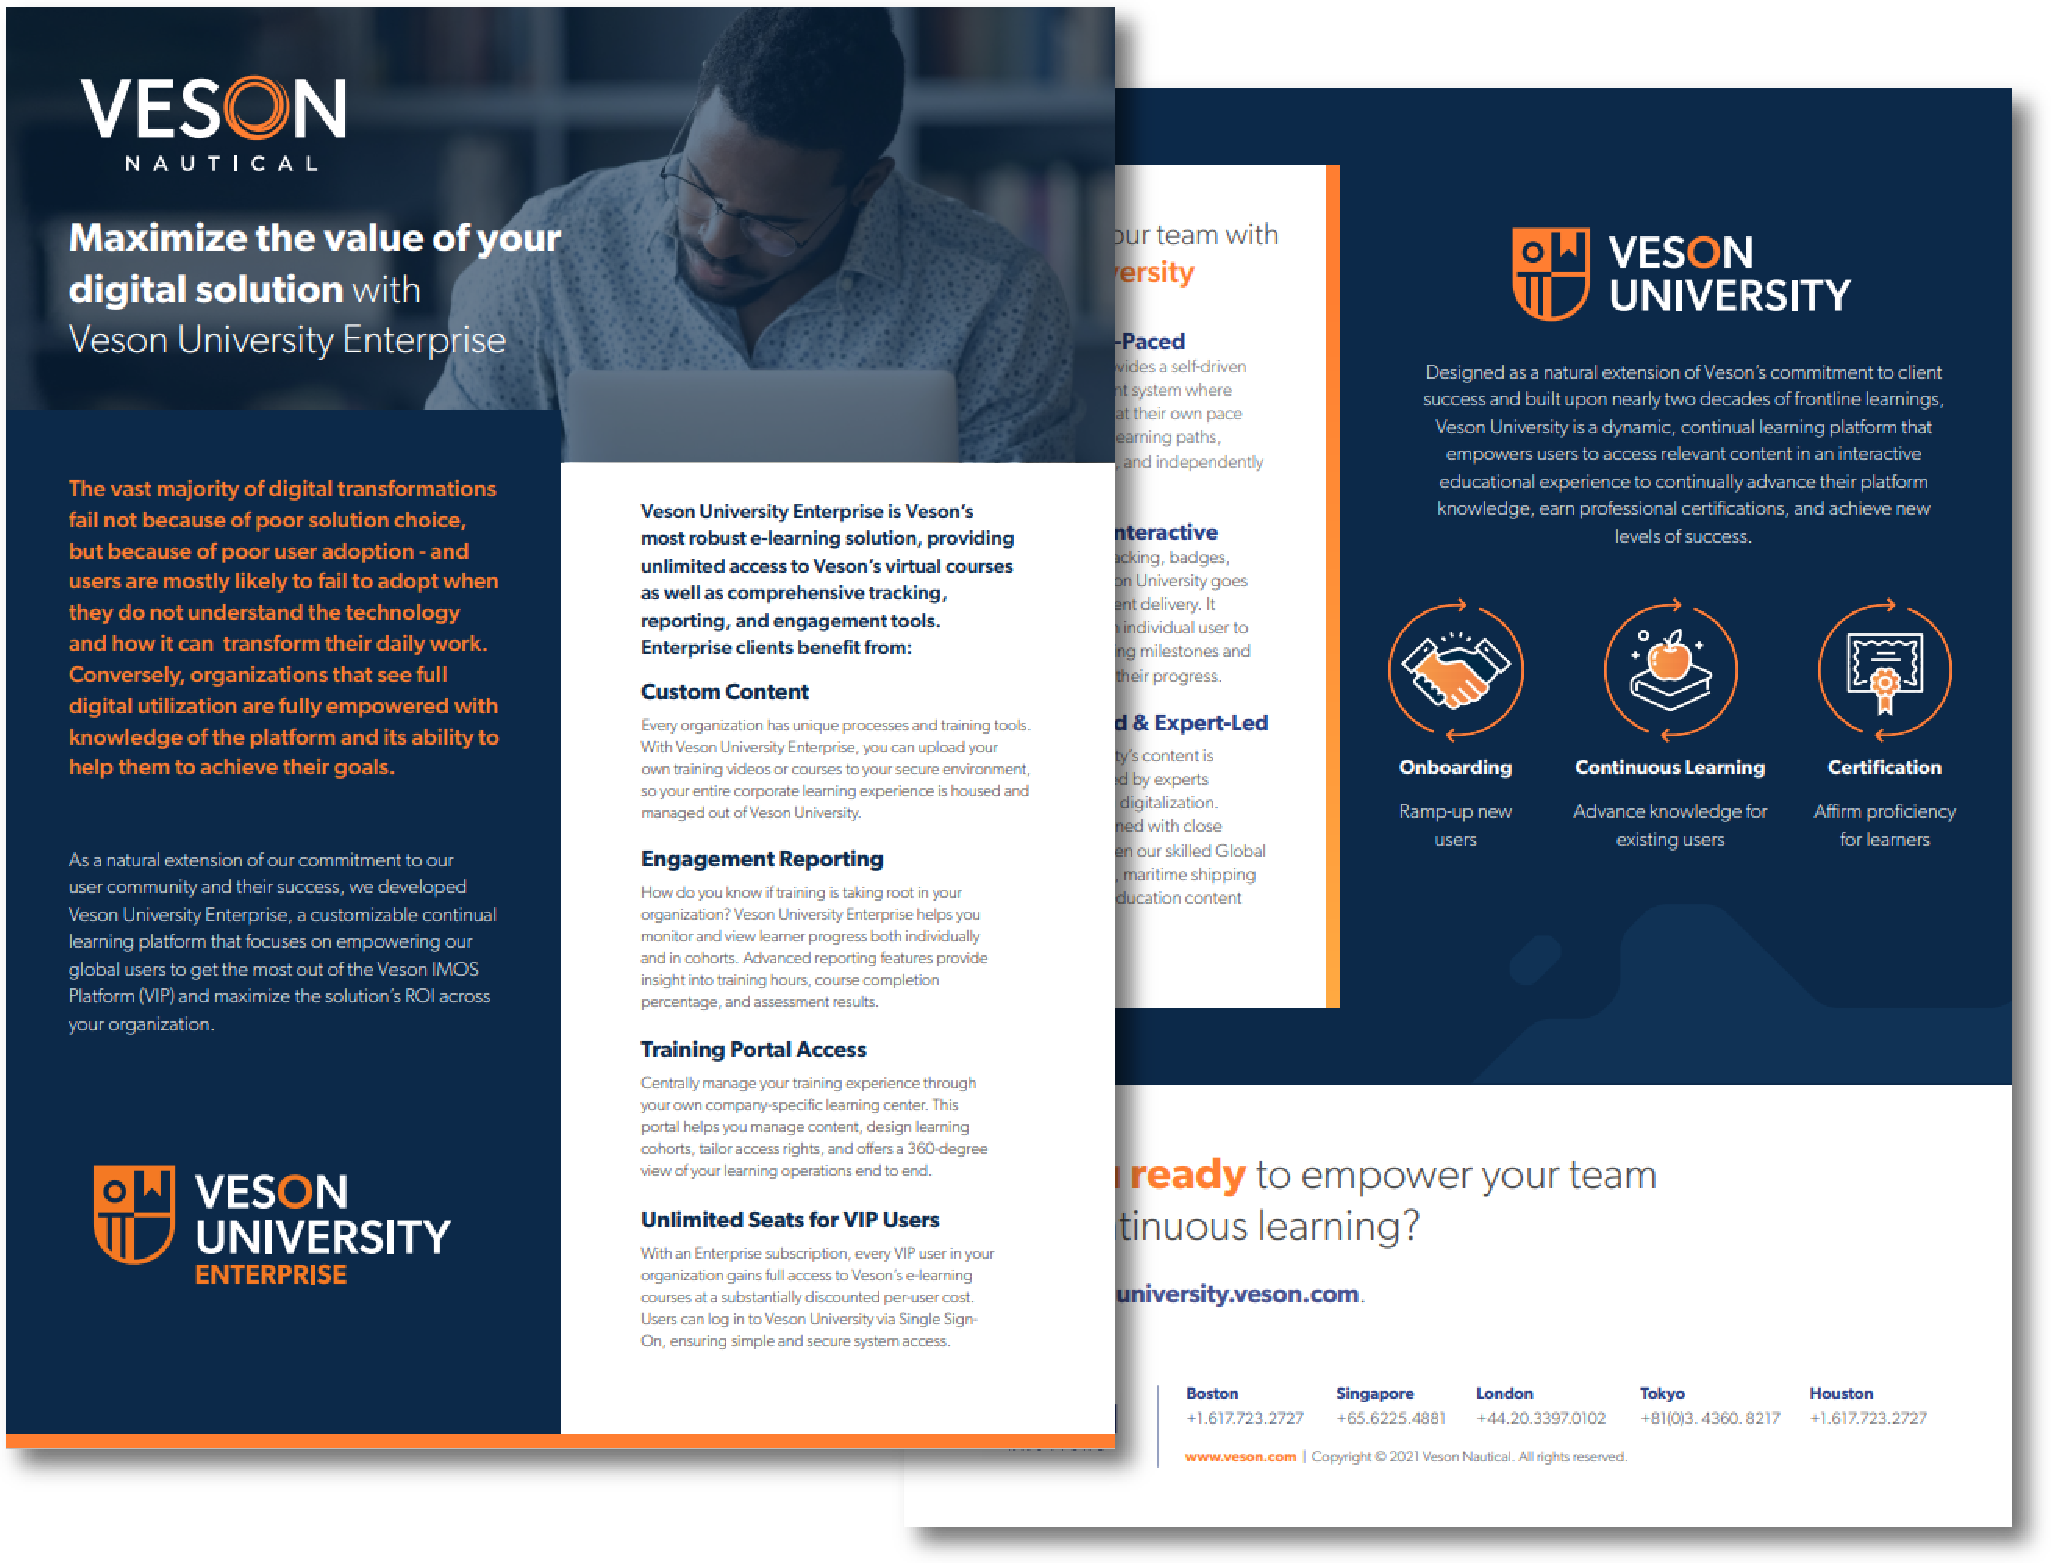 Veson University Enterprise Info Sheet